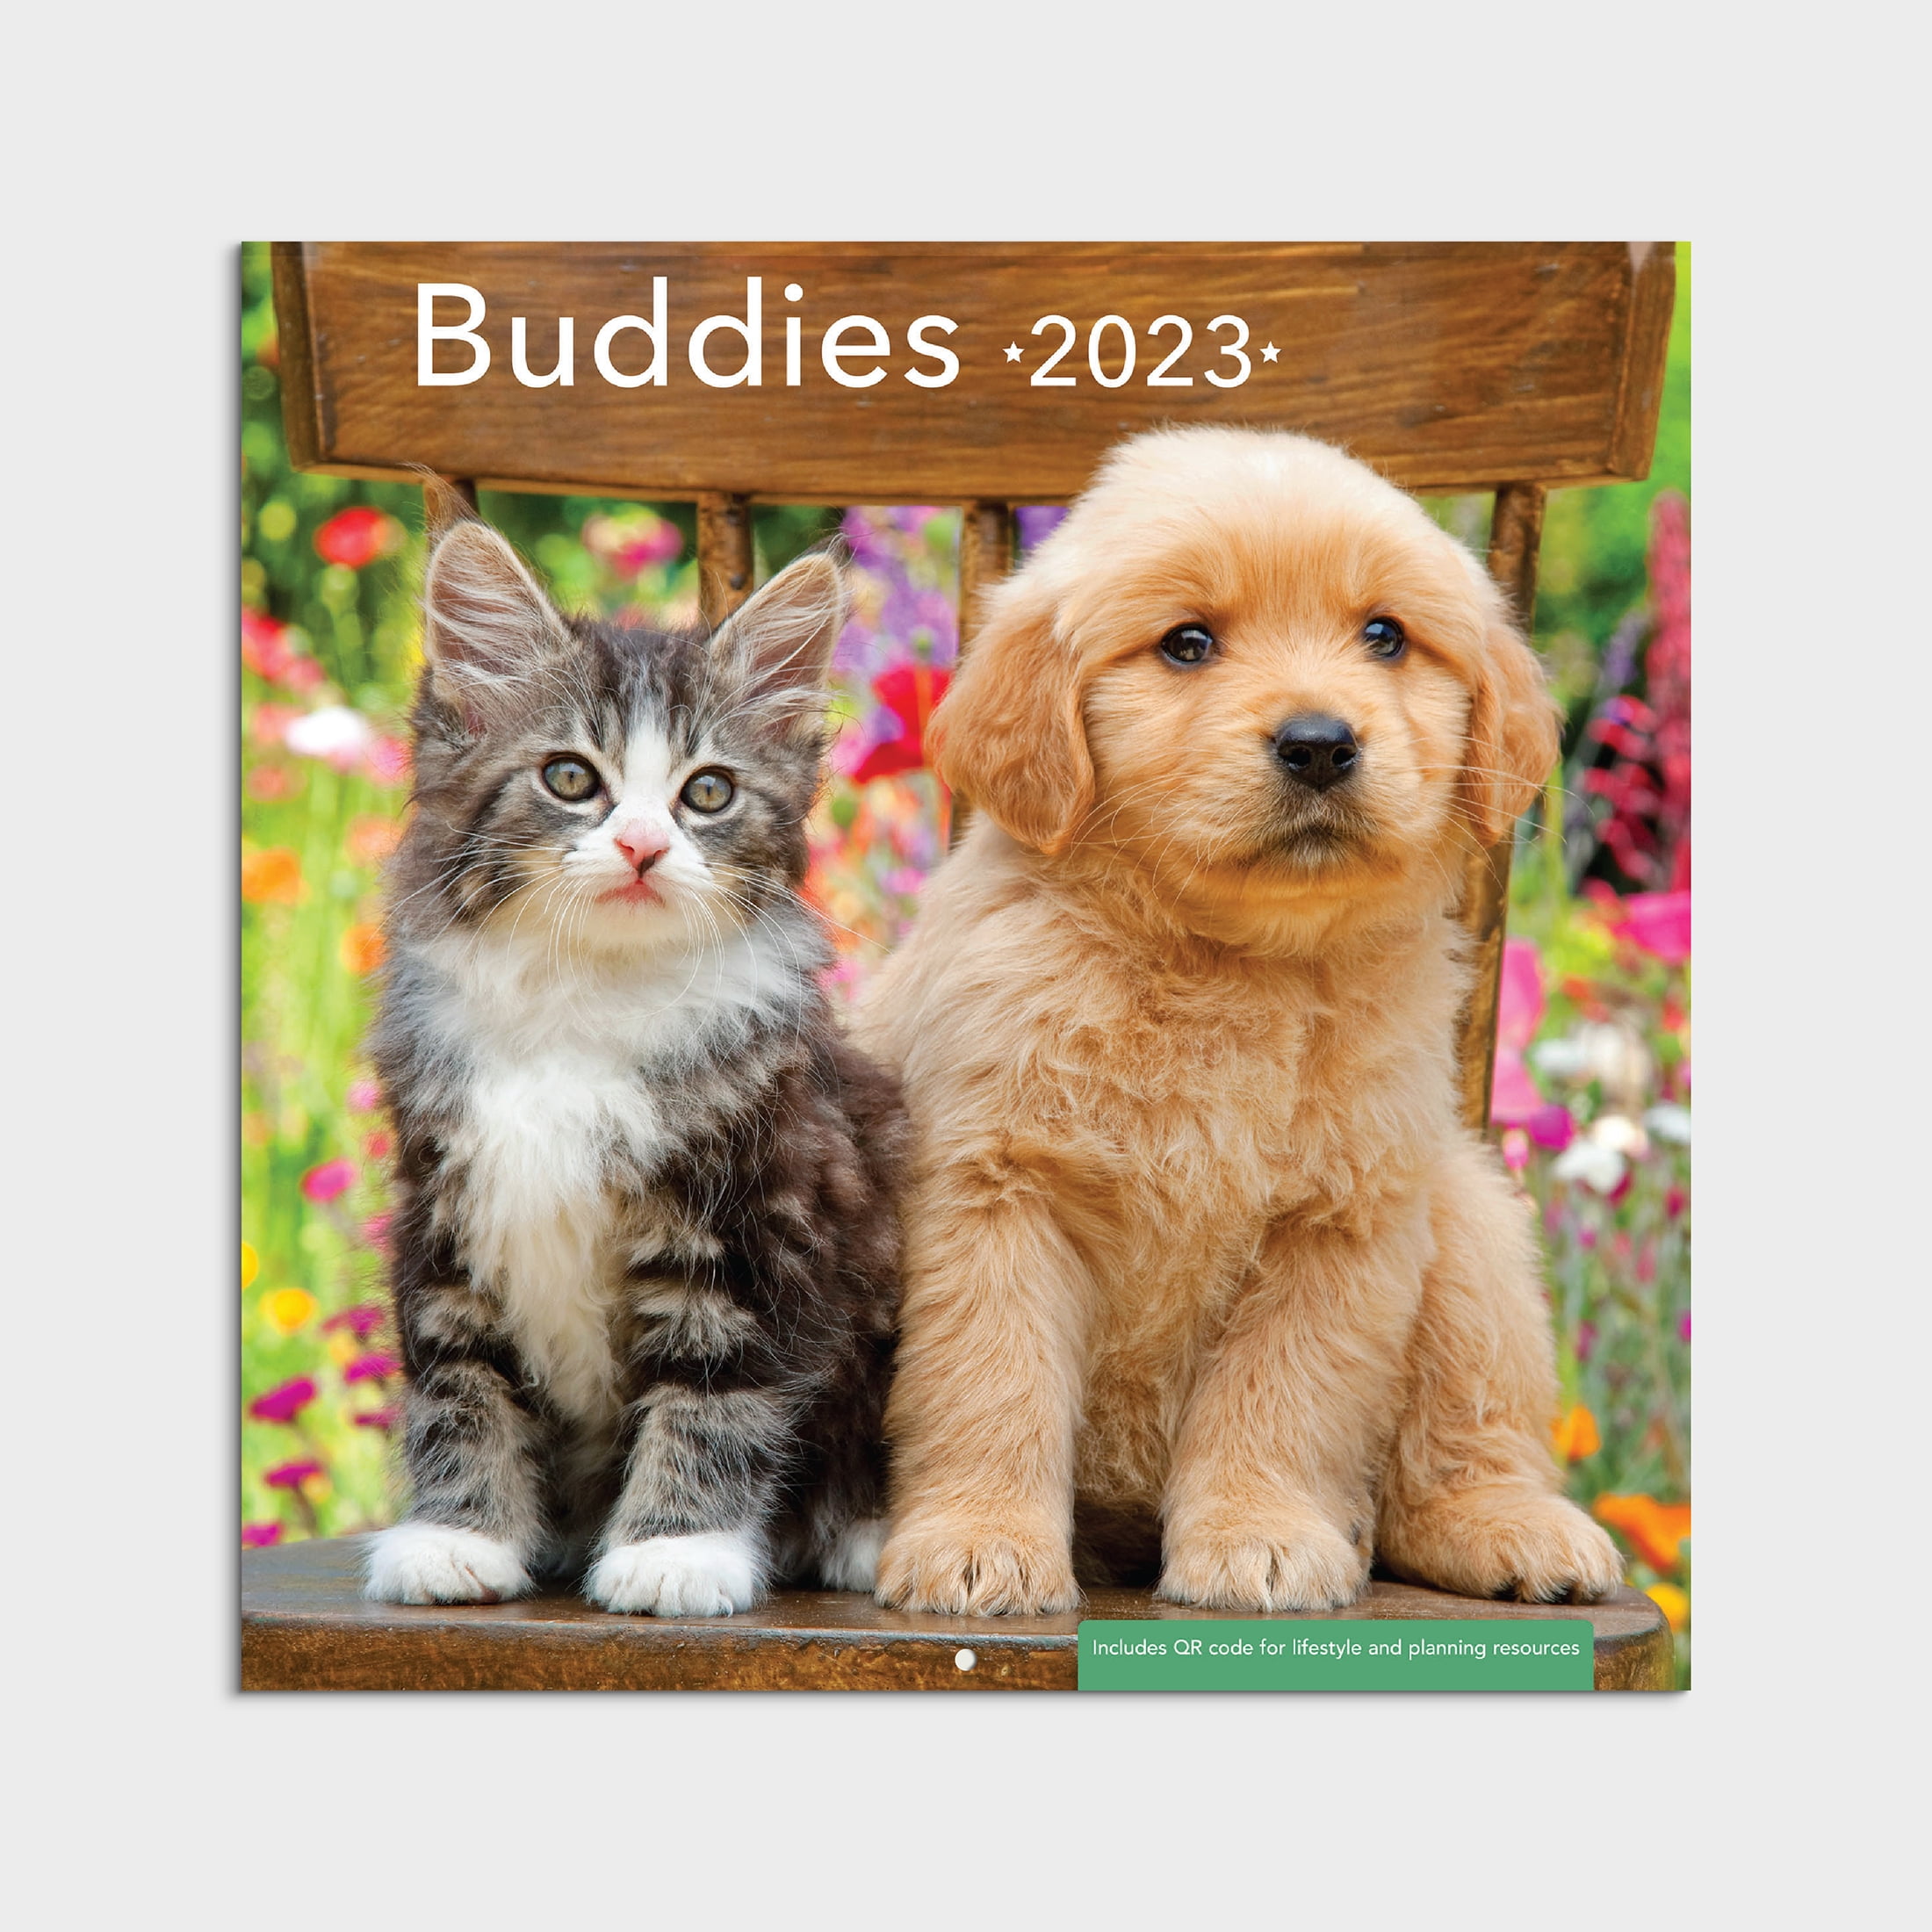 2023-12 Month Calendar-Buddies (puppies and kittens) 12x12 Hanging Wall Calendar by DaySpring